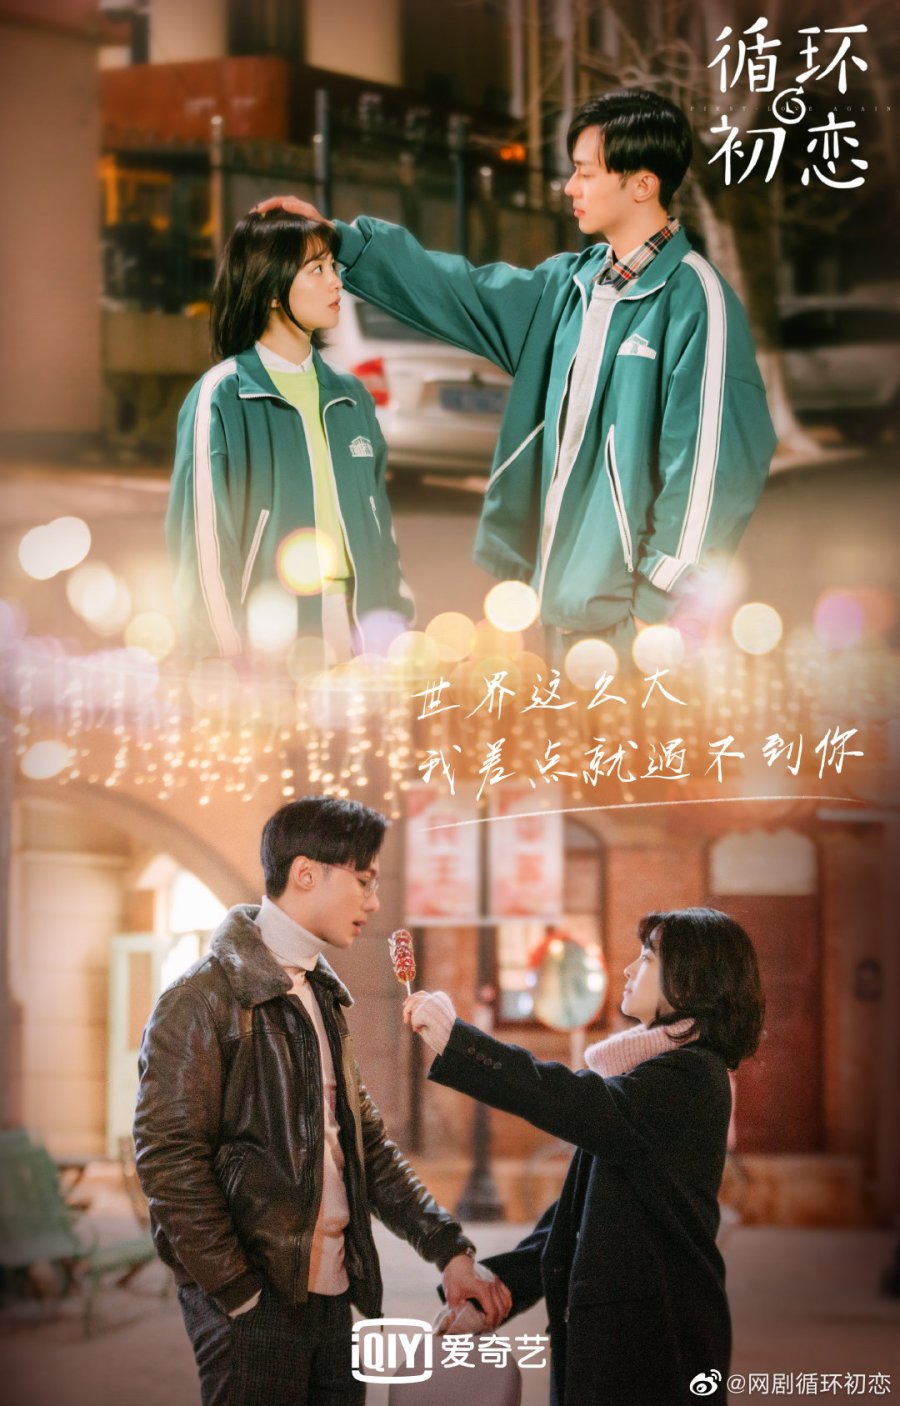 Love chinese drama plot Plot Love